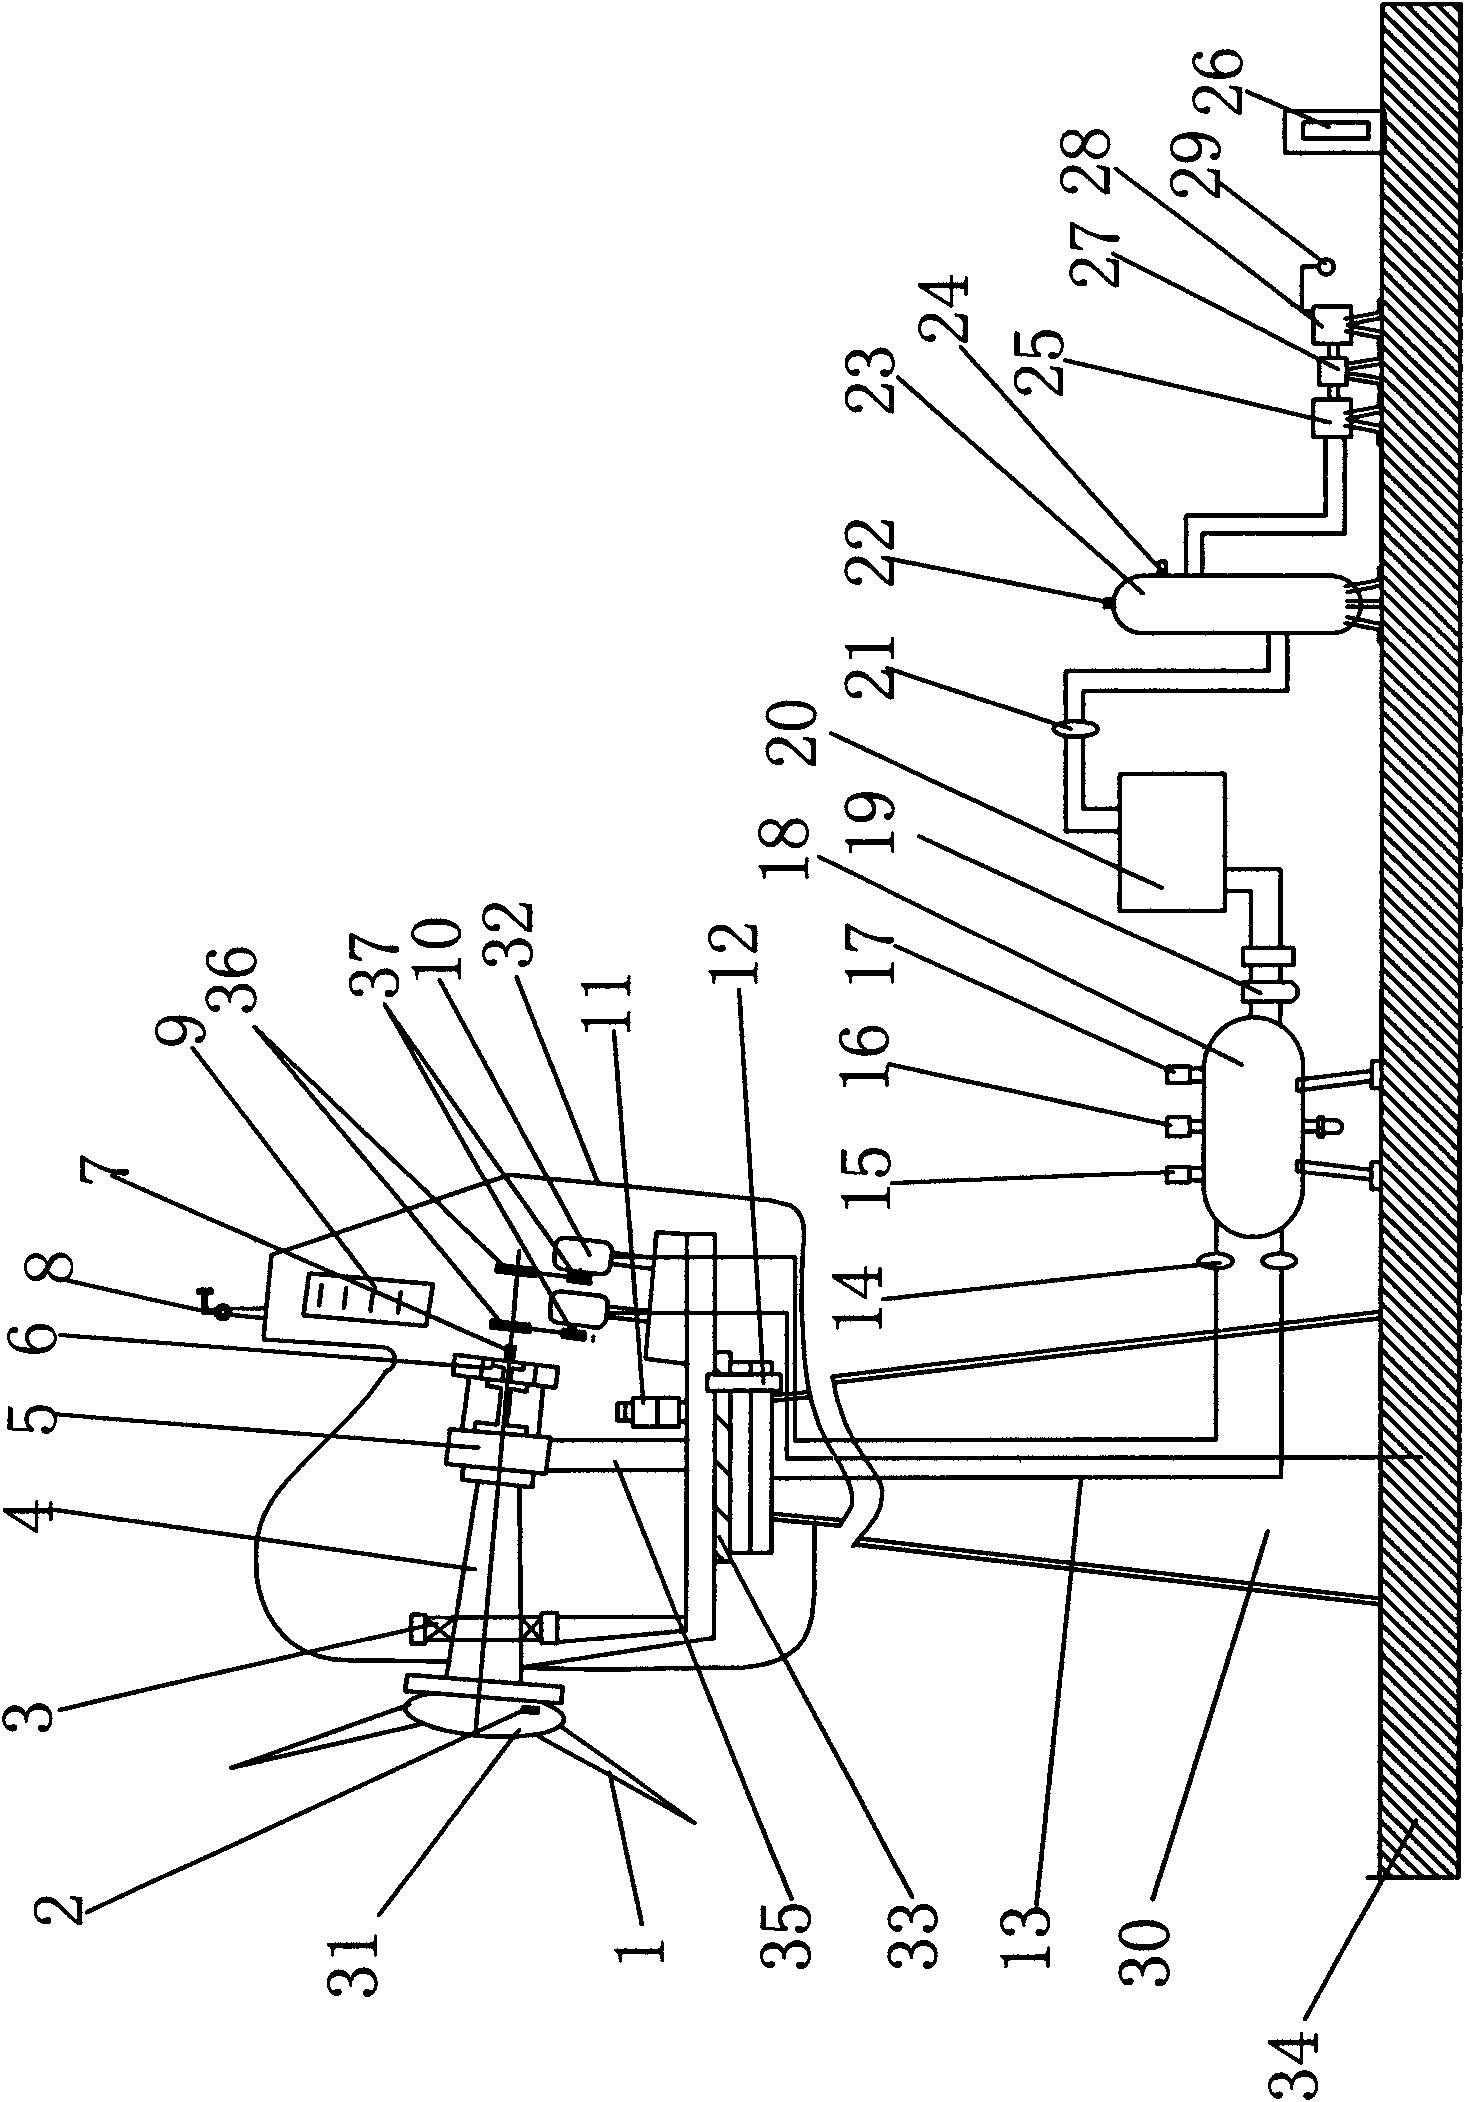 Universal horizontal-shaft wind generating unit